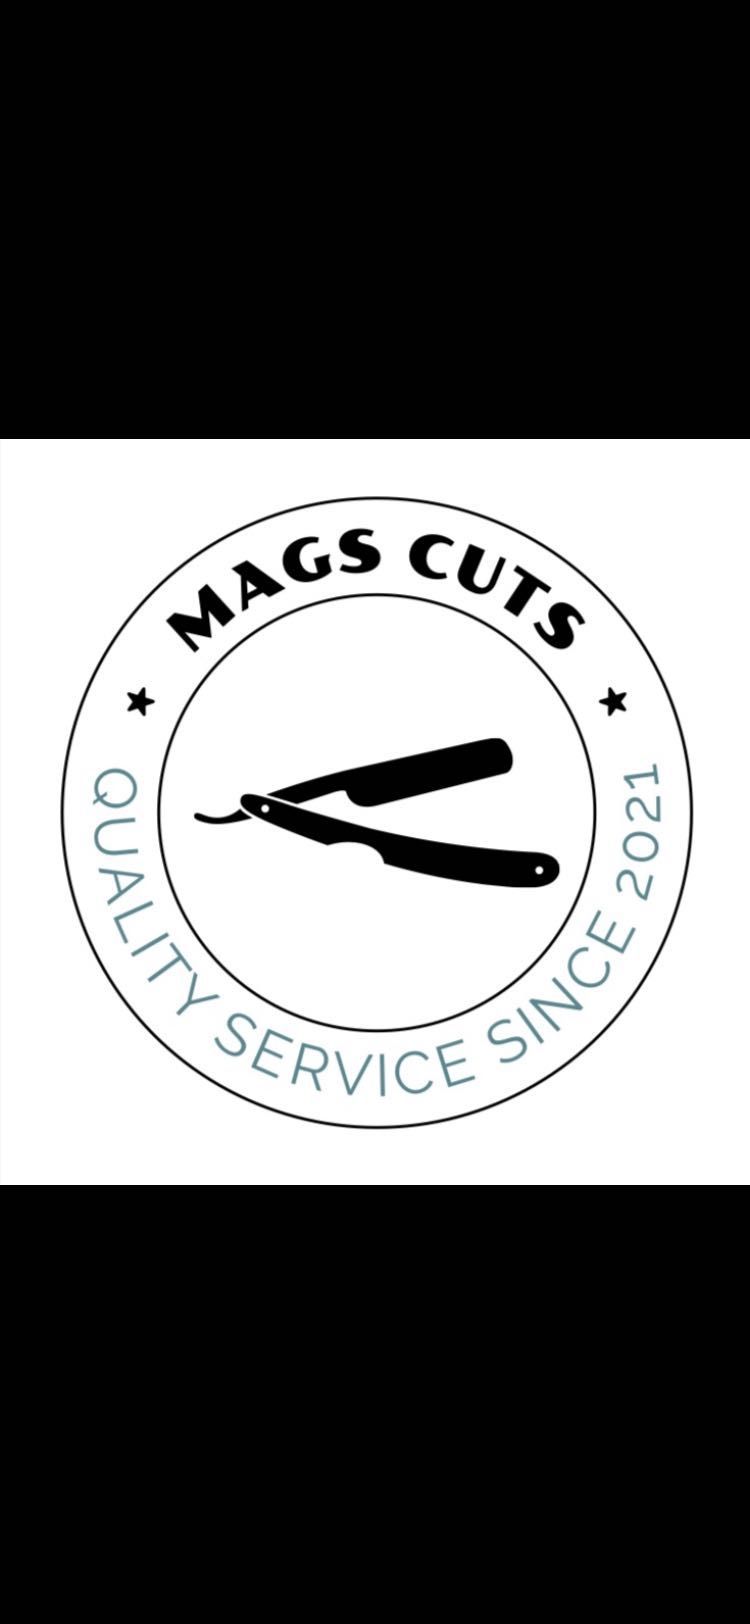 MagsCuts, 2S610 Illinois Route 59, Unit 3, Warrenville, 60555